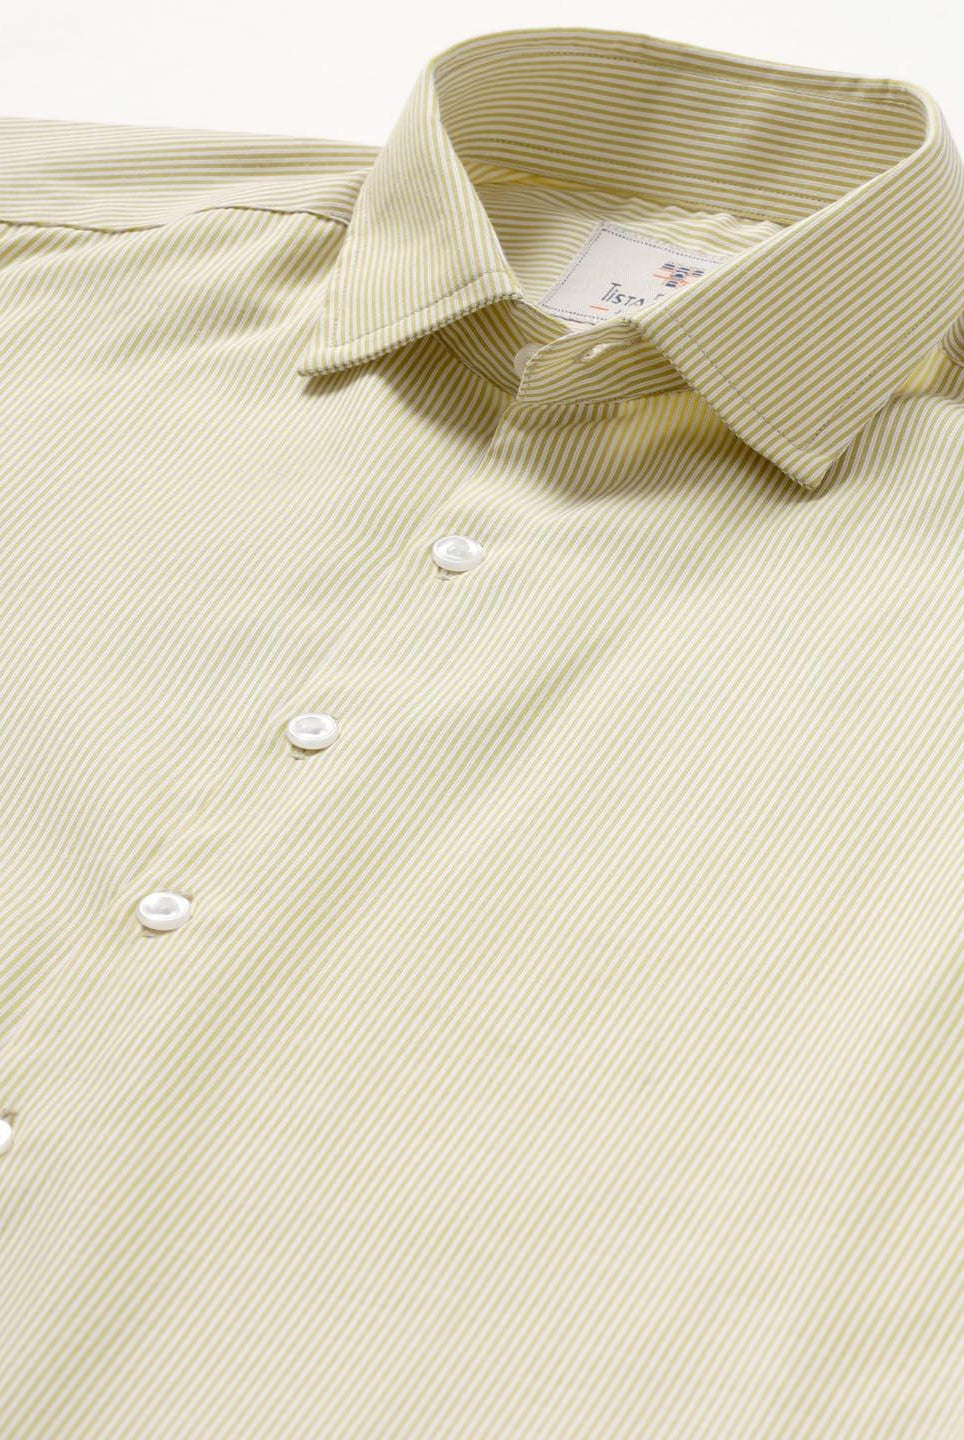 Small Green Stripes Shirt - Tistabene